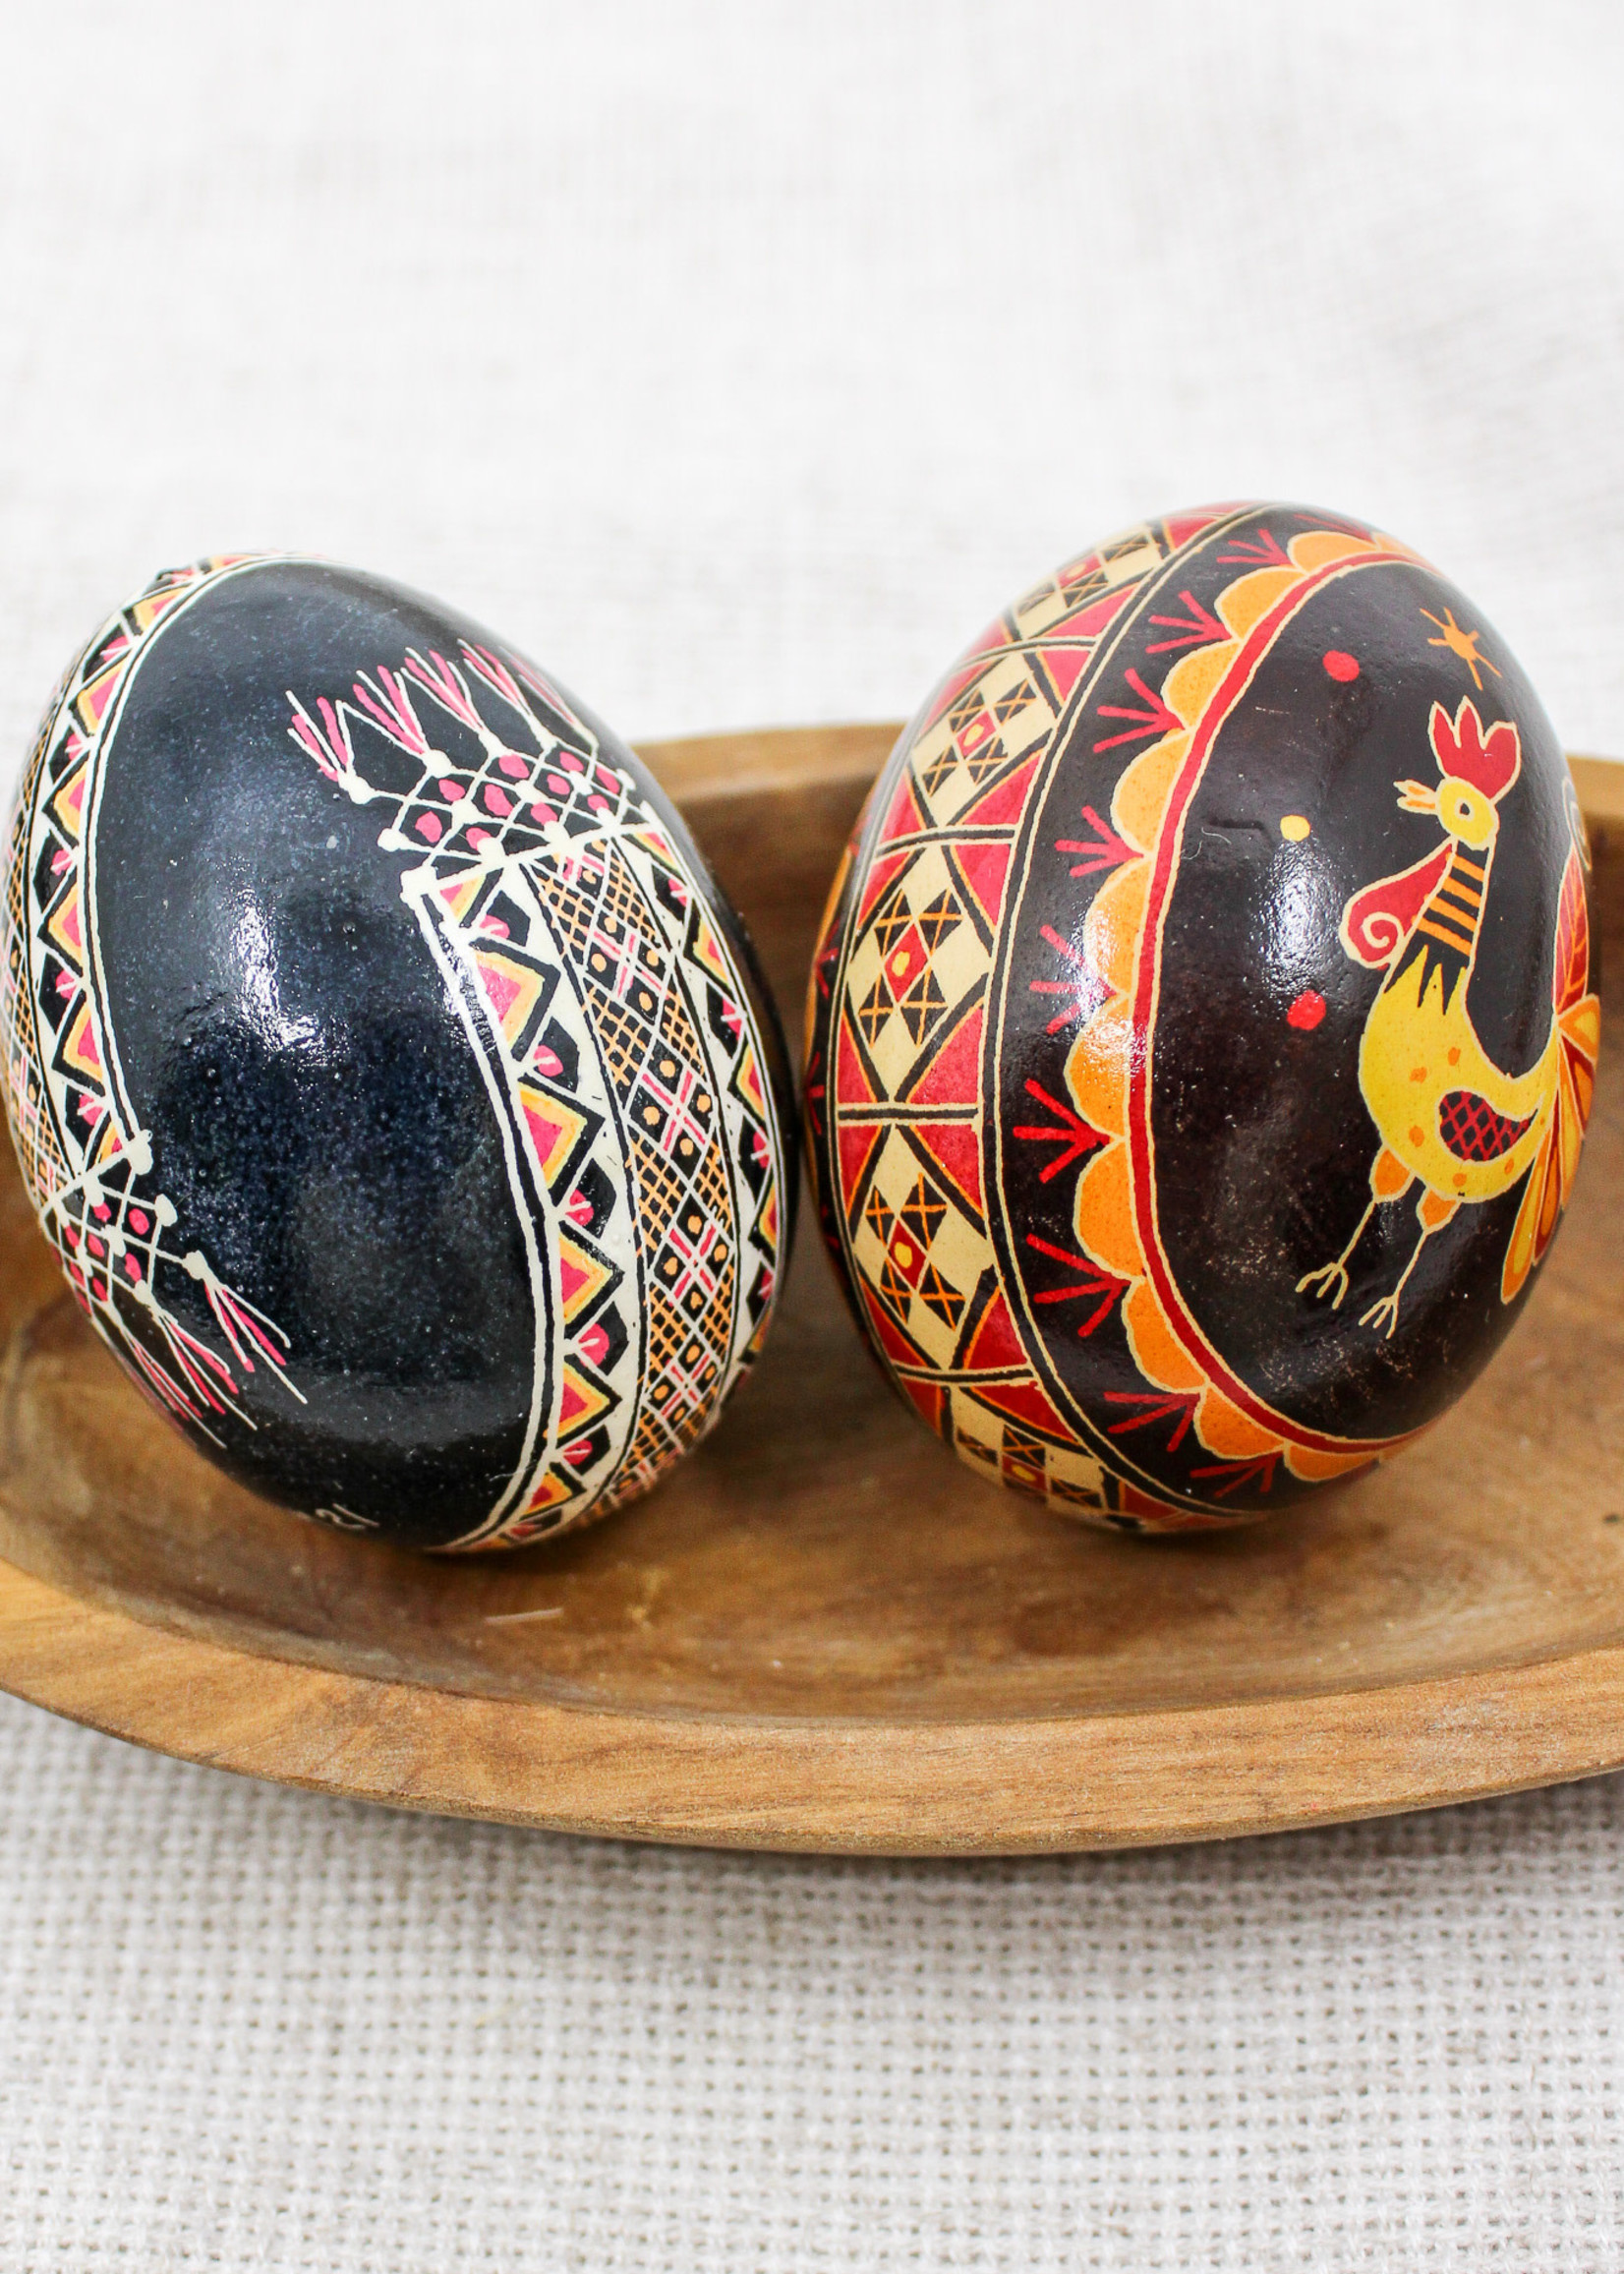 PYSANKA -  Handmade, Hutsul  (region) style decorated eggs,